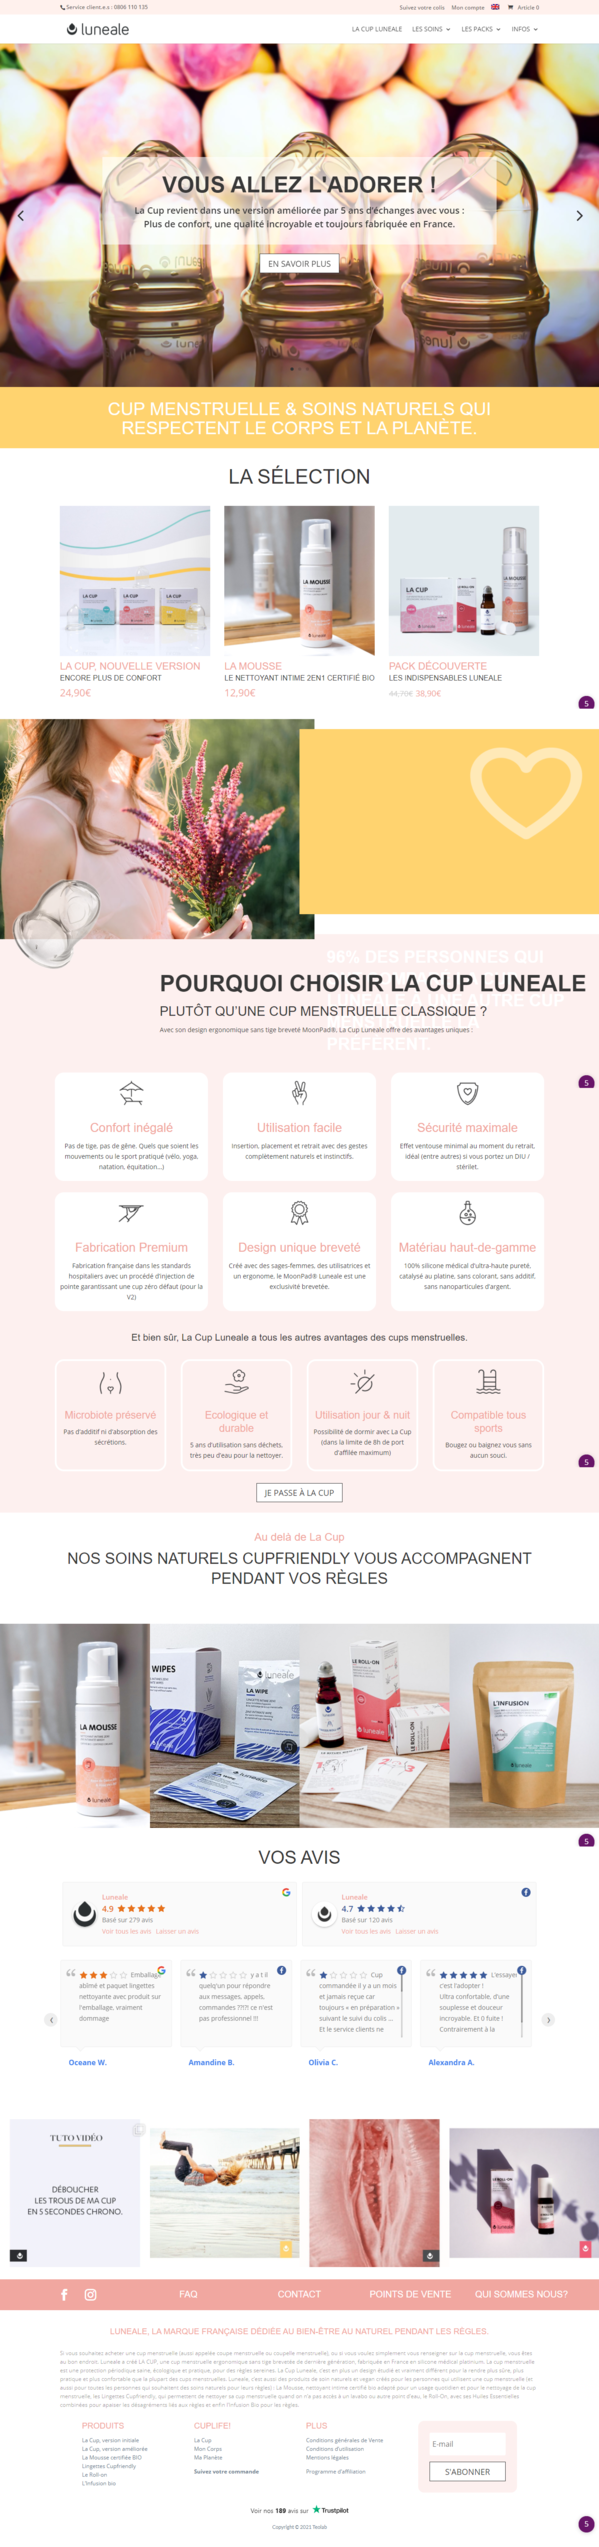 Luneale _ cup menstruelle & soins naturels cupfriendly - www.luneale.co.png